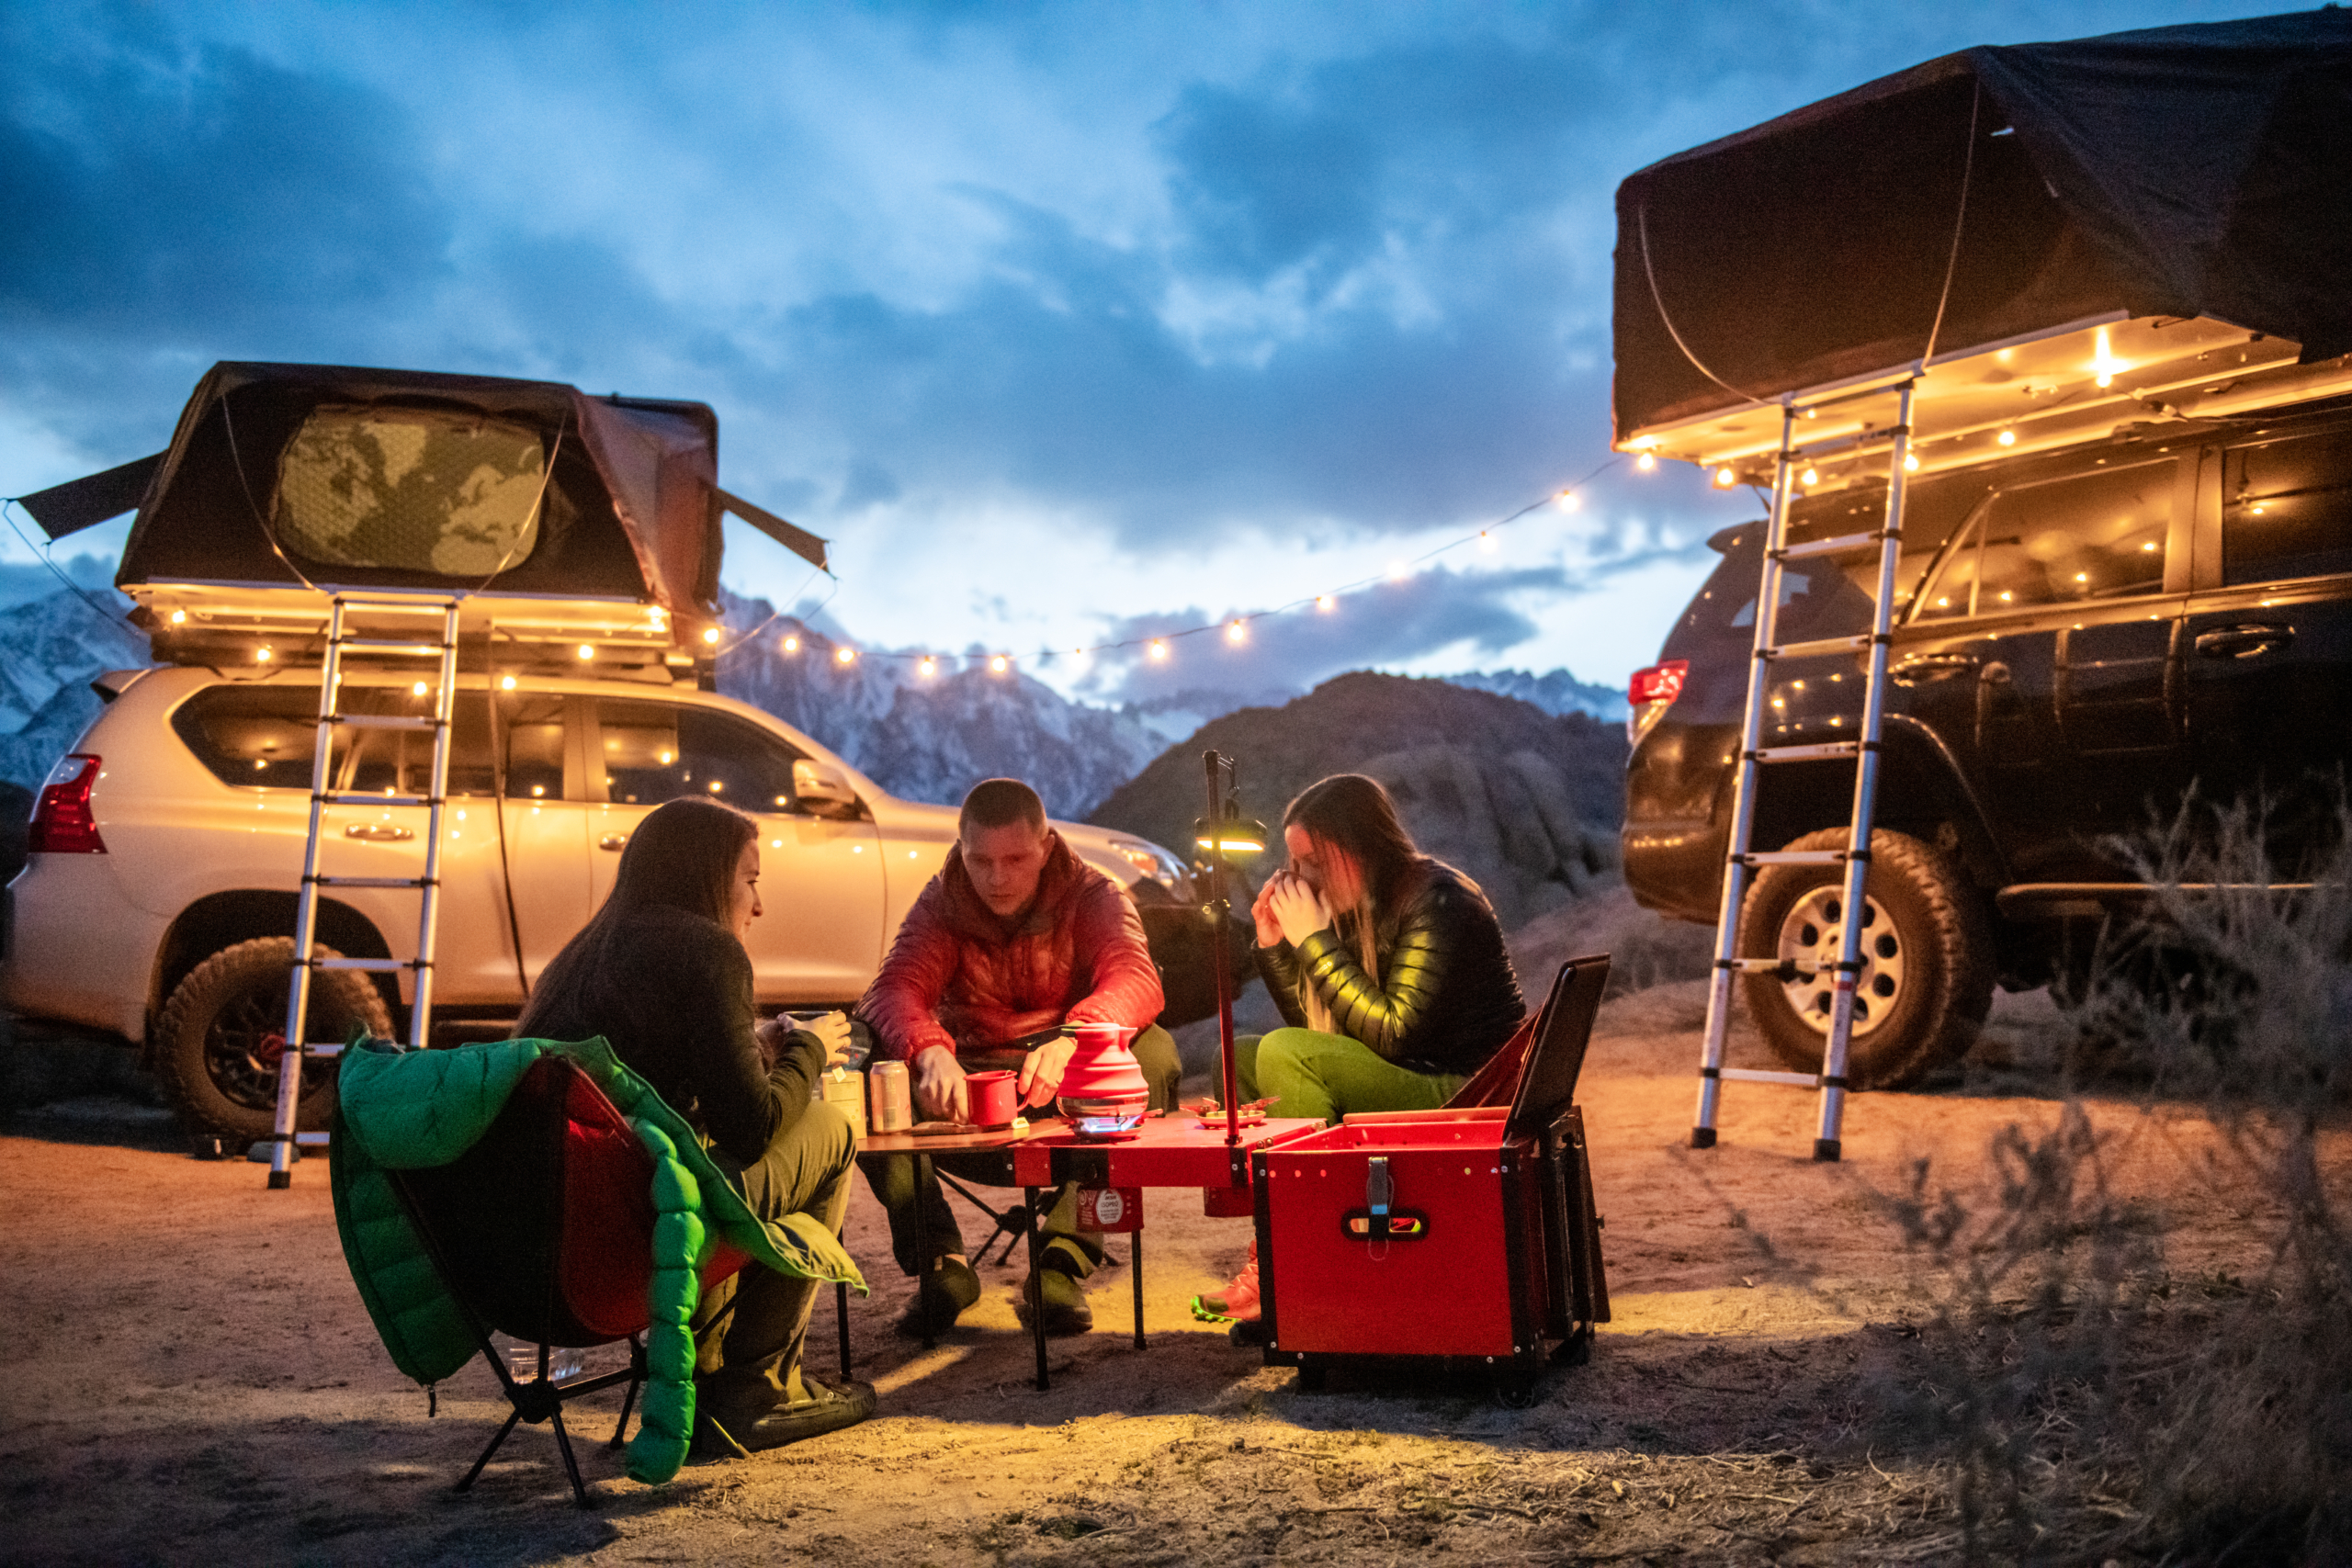 Camping-Dachzelt-Outdoor-Offroad-Abenteuer-Camp-Urlaub-Picknick-Abend